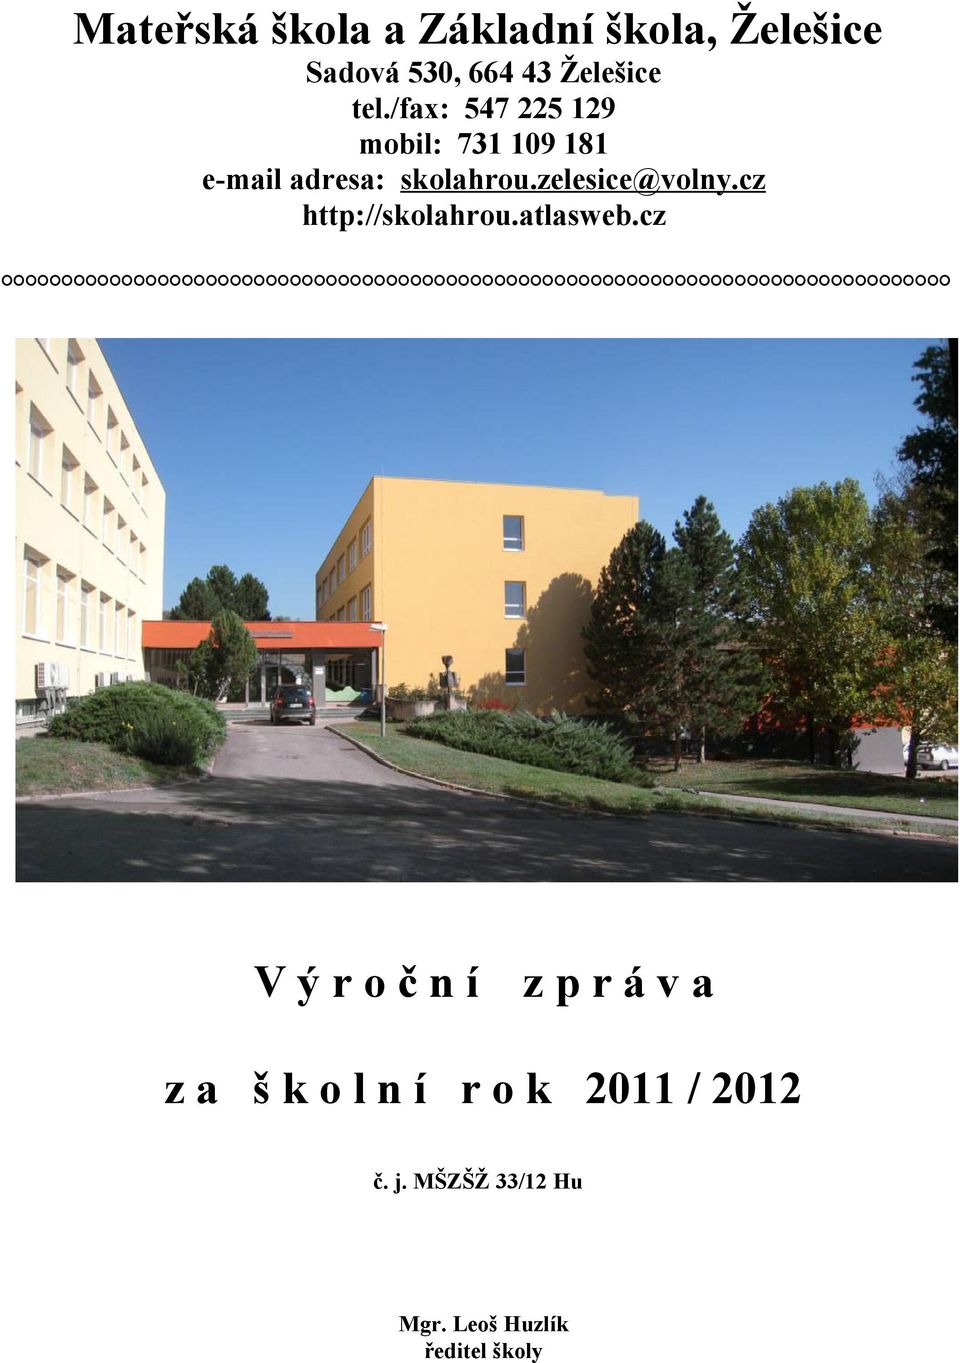 zelesice@volny.cz http://skolahrou.atlasweb.